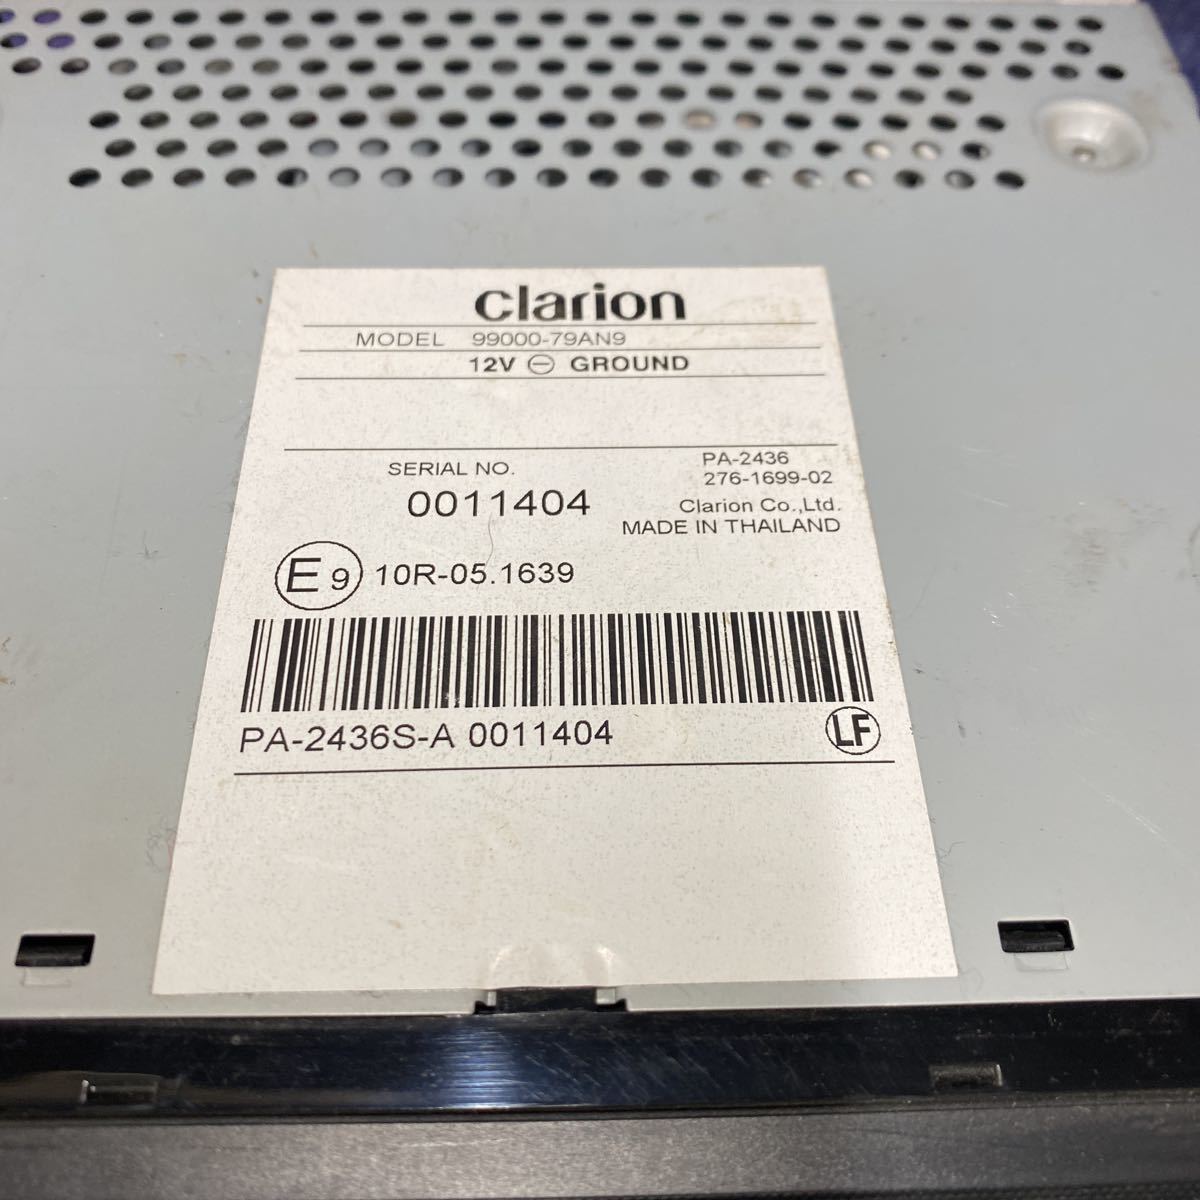 Clarion CD/USB/AUX MODEL 99000-79AN9